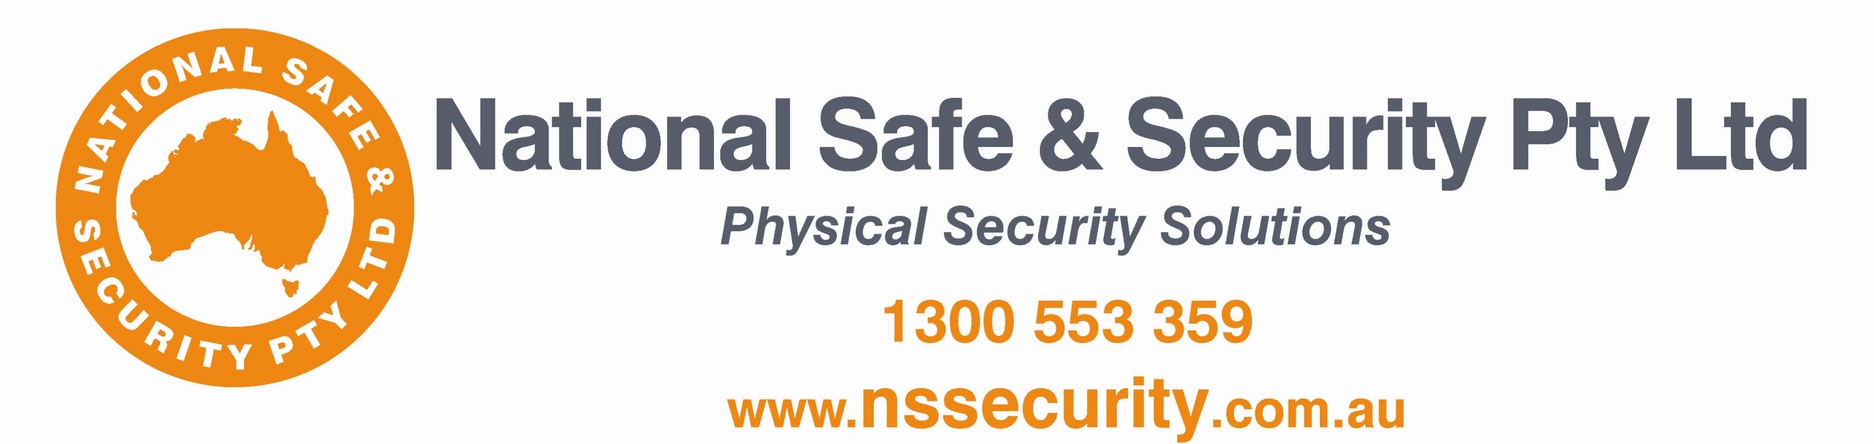 national-safe-security-logo-2013